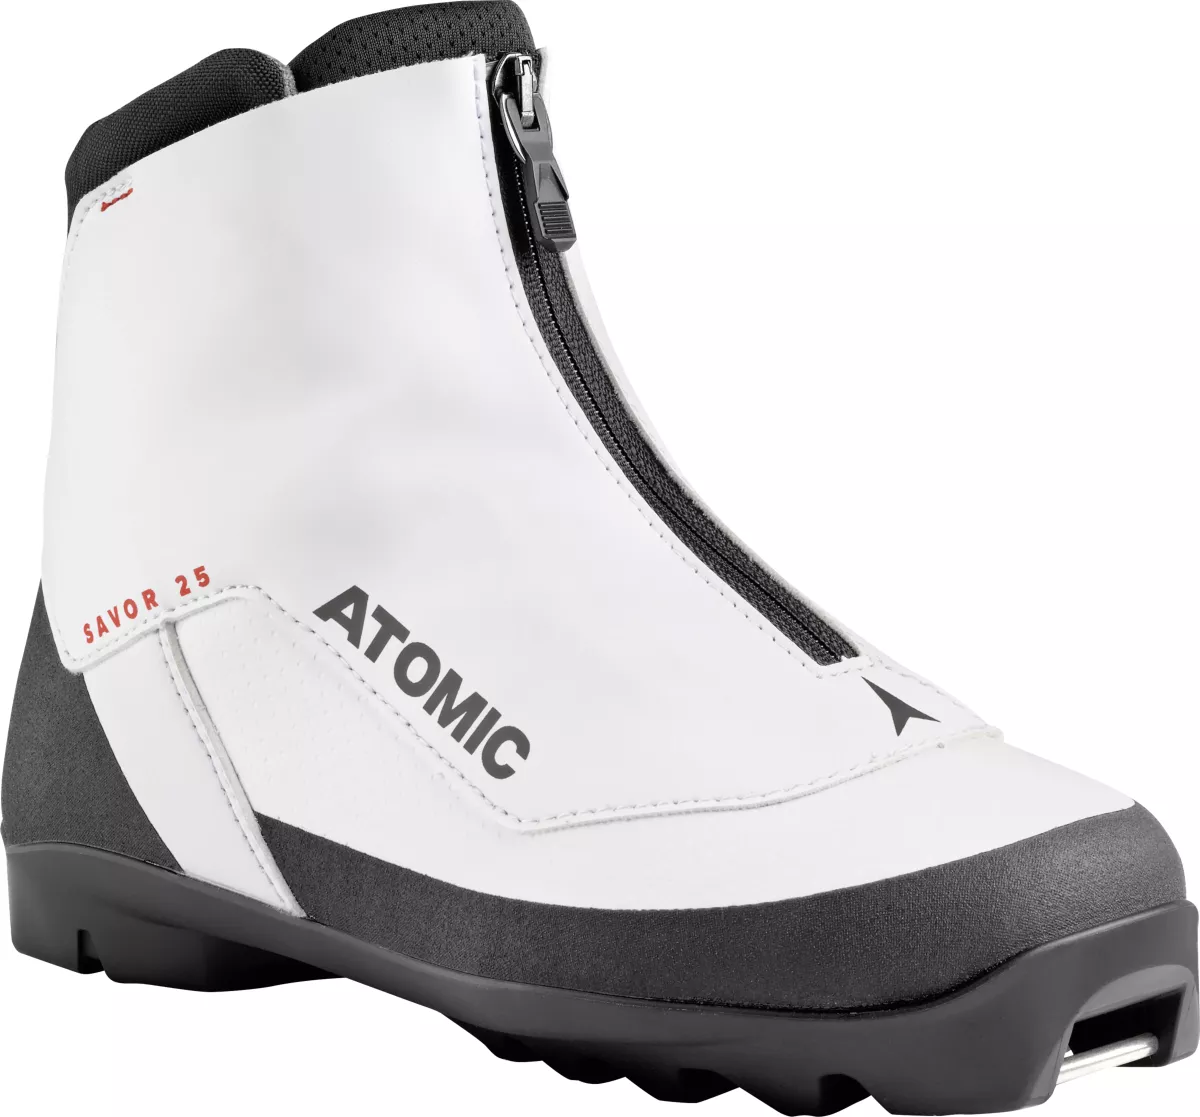 Atomic Savor 25 W sífutó cipő, white, PROLINK